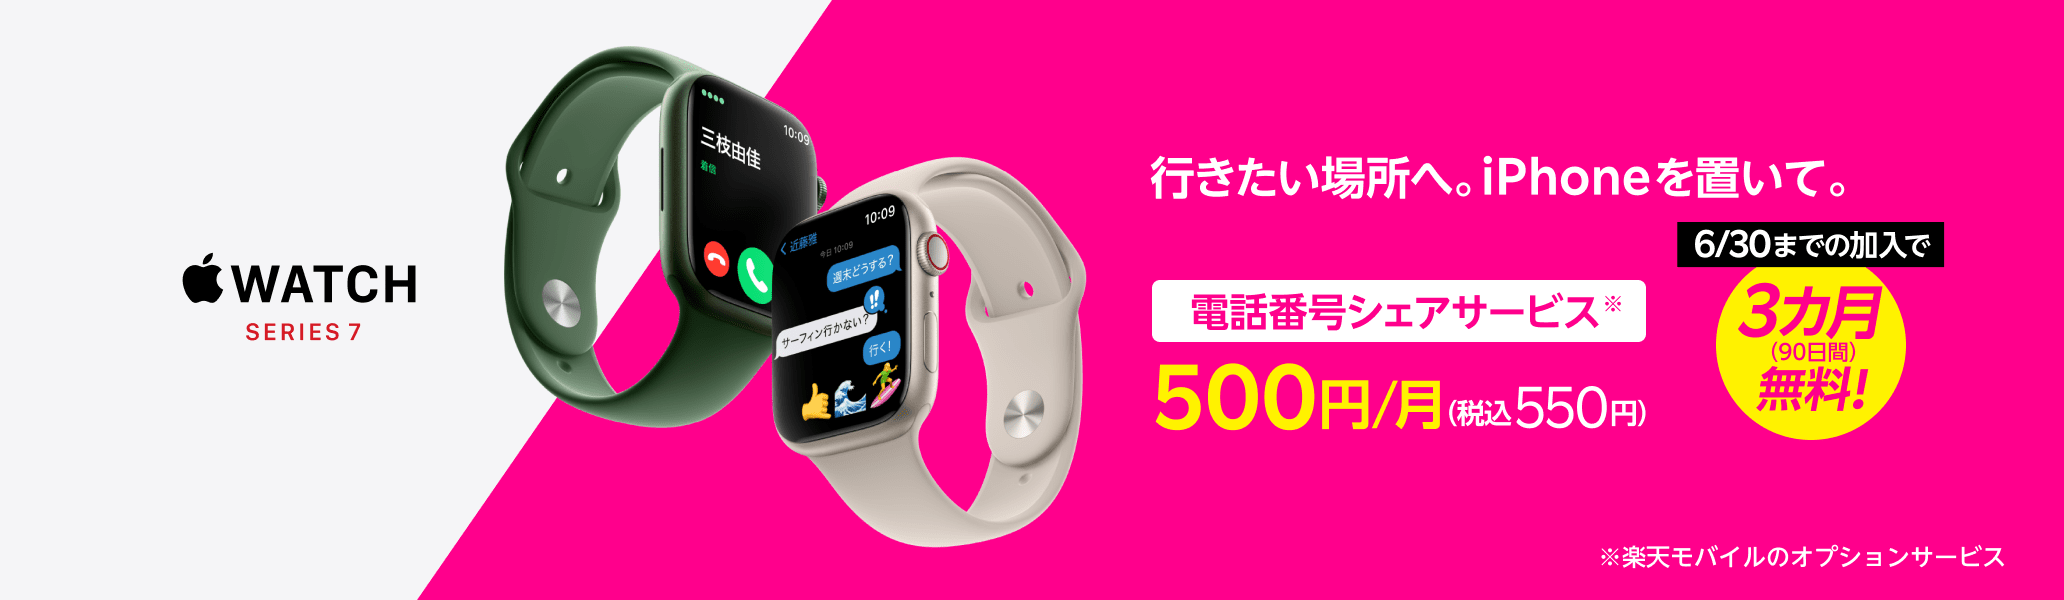 Apple Watch Series 7。電話番号シェアサービス500円/月（税込550円）3カ月（90日間）無料！